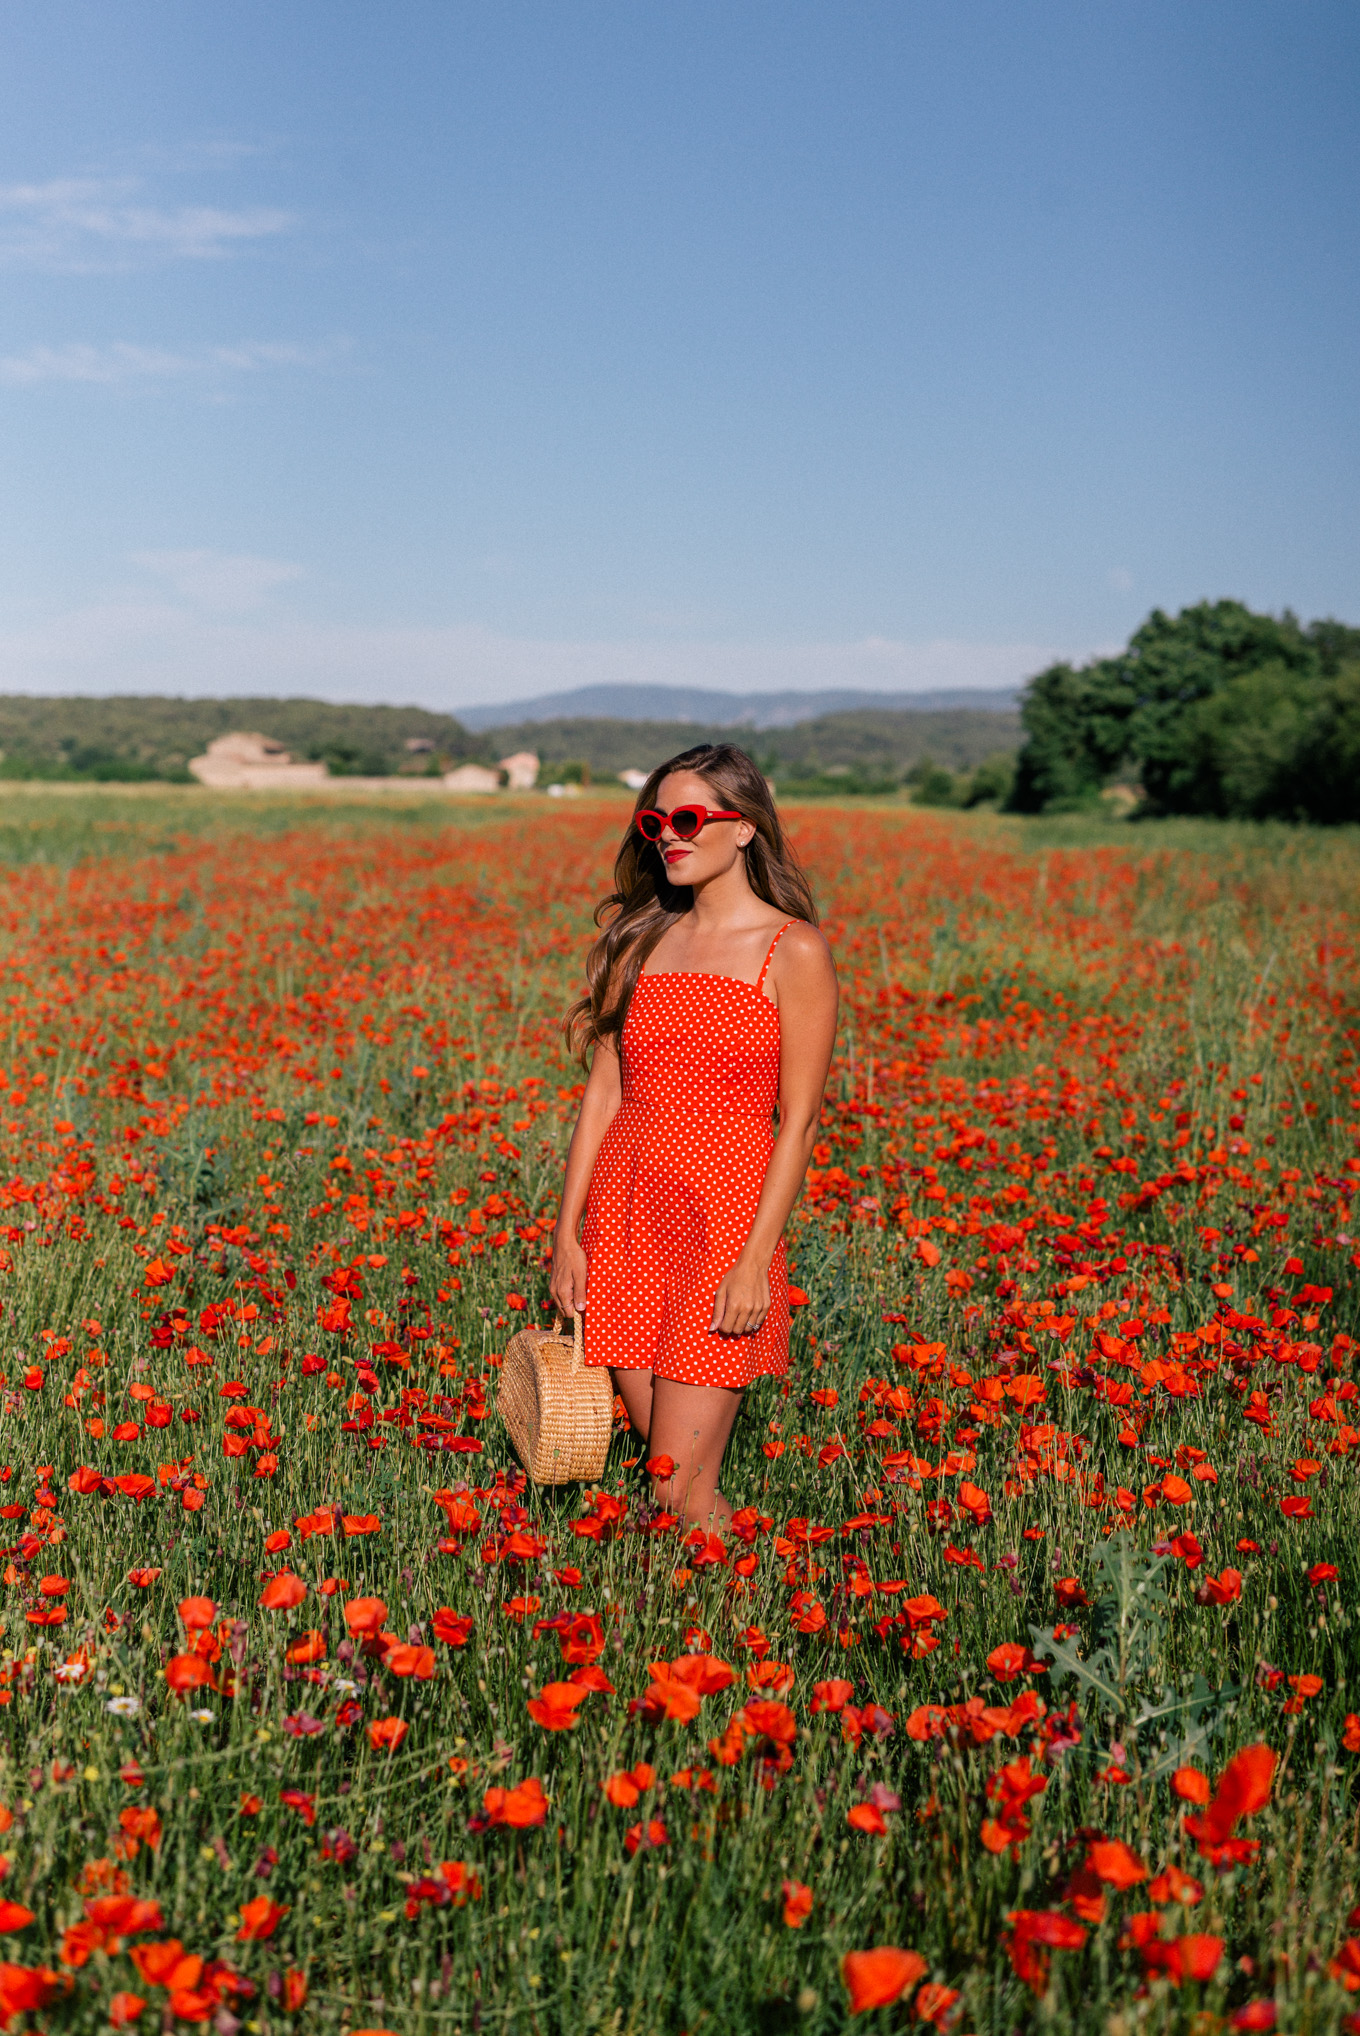 gmg-red-dress-poppy-fields-france-1008690